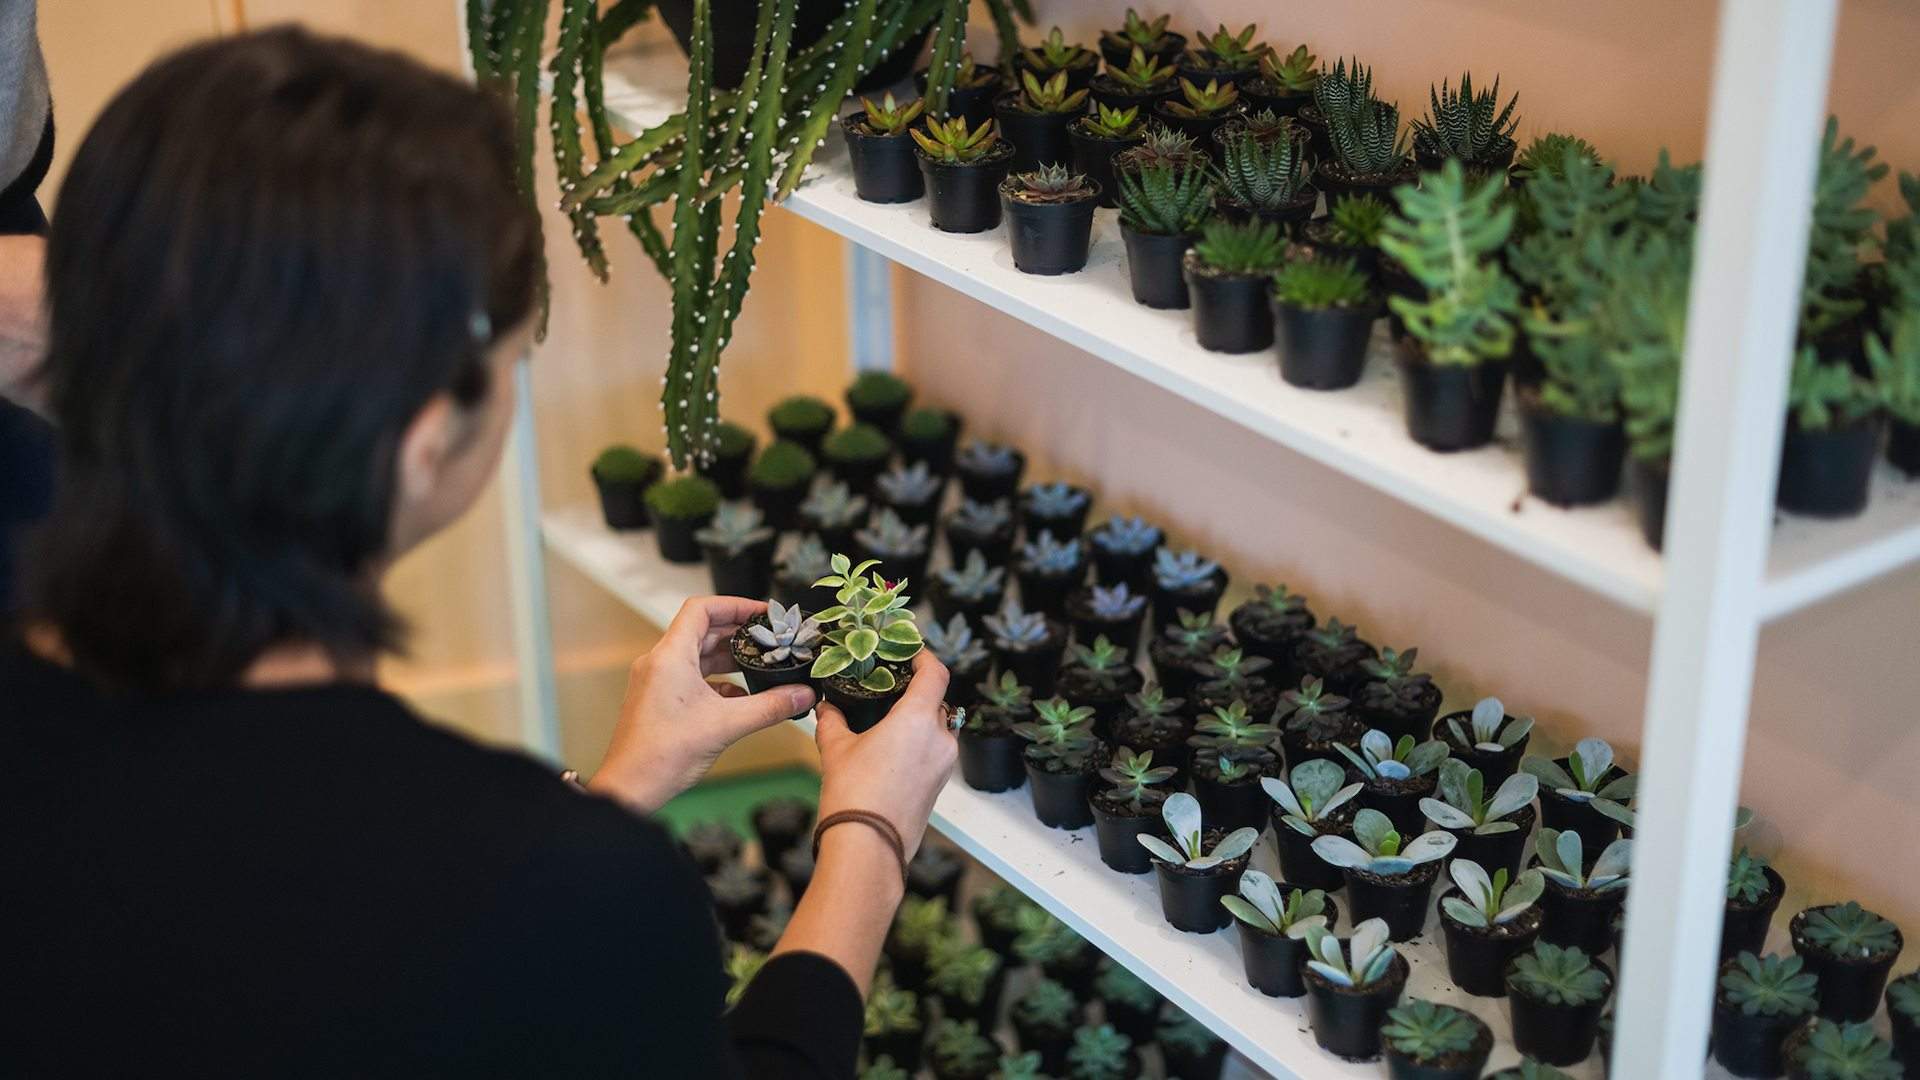 Little Succers Has Opened a Permanent Succulent Studio and Build-Your-Own Terrarium Bar